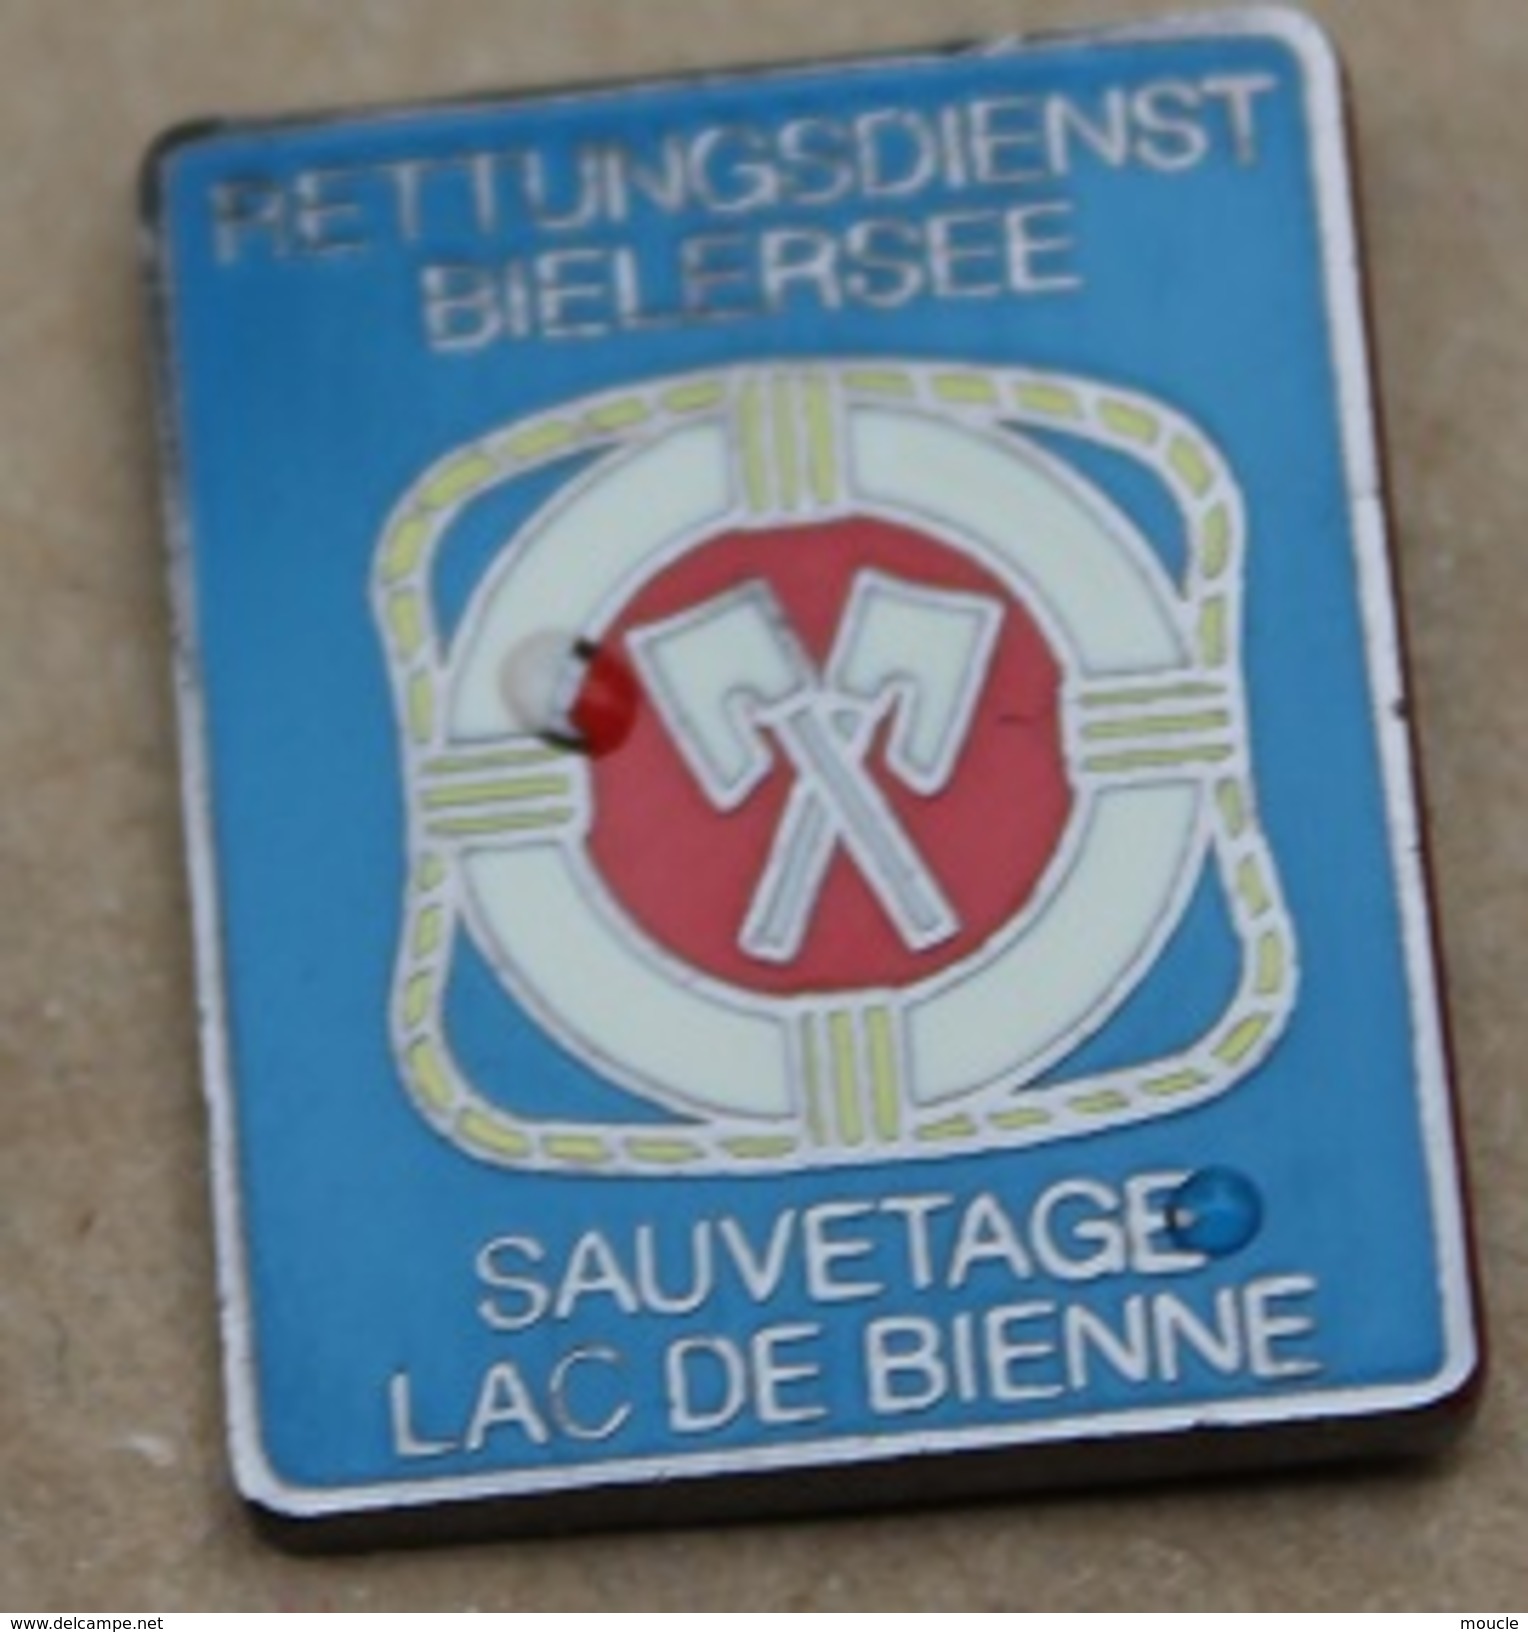 SAUVETAGE LA DE BIENNE - RETTUNGSDIENST BIELERSEE - BOUEE  - SWISS - SUISSE - SCHWEIZ   -   (19) - Medical